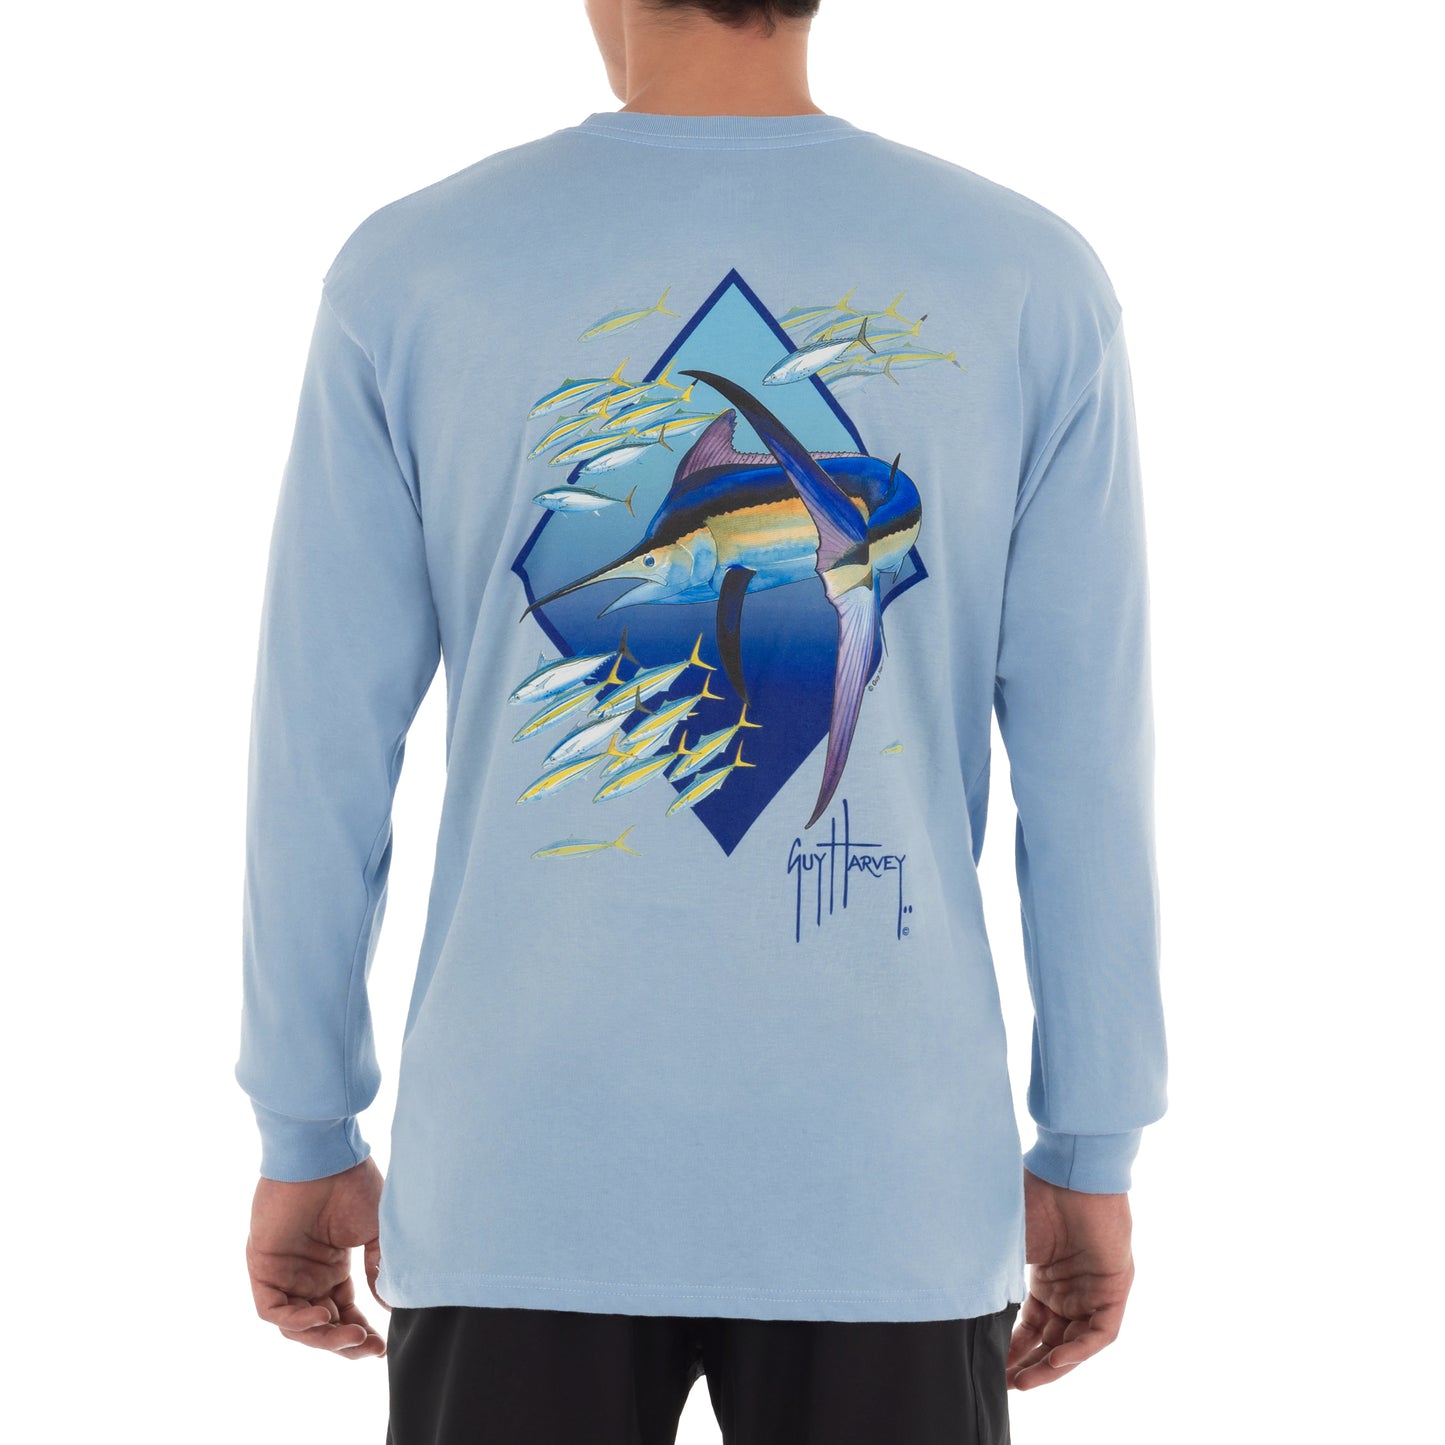 Men's Diamond Edge Long Sleeve Blue T-Shirt – Guy Harvey